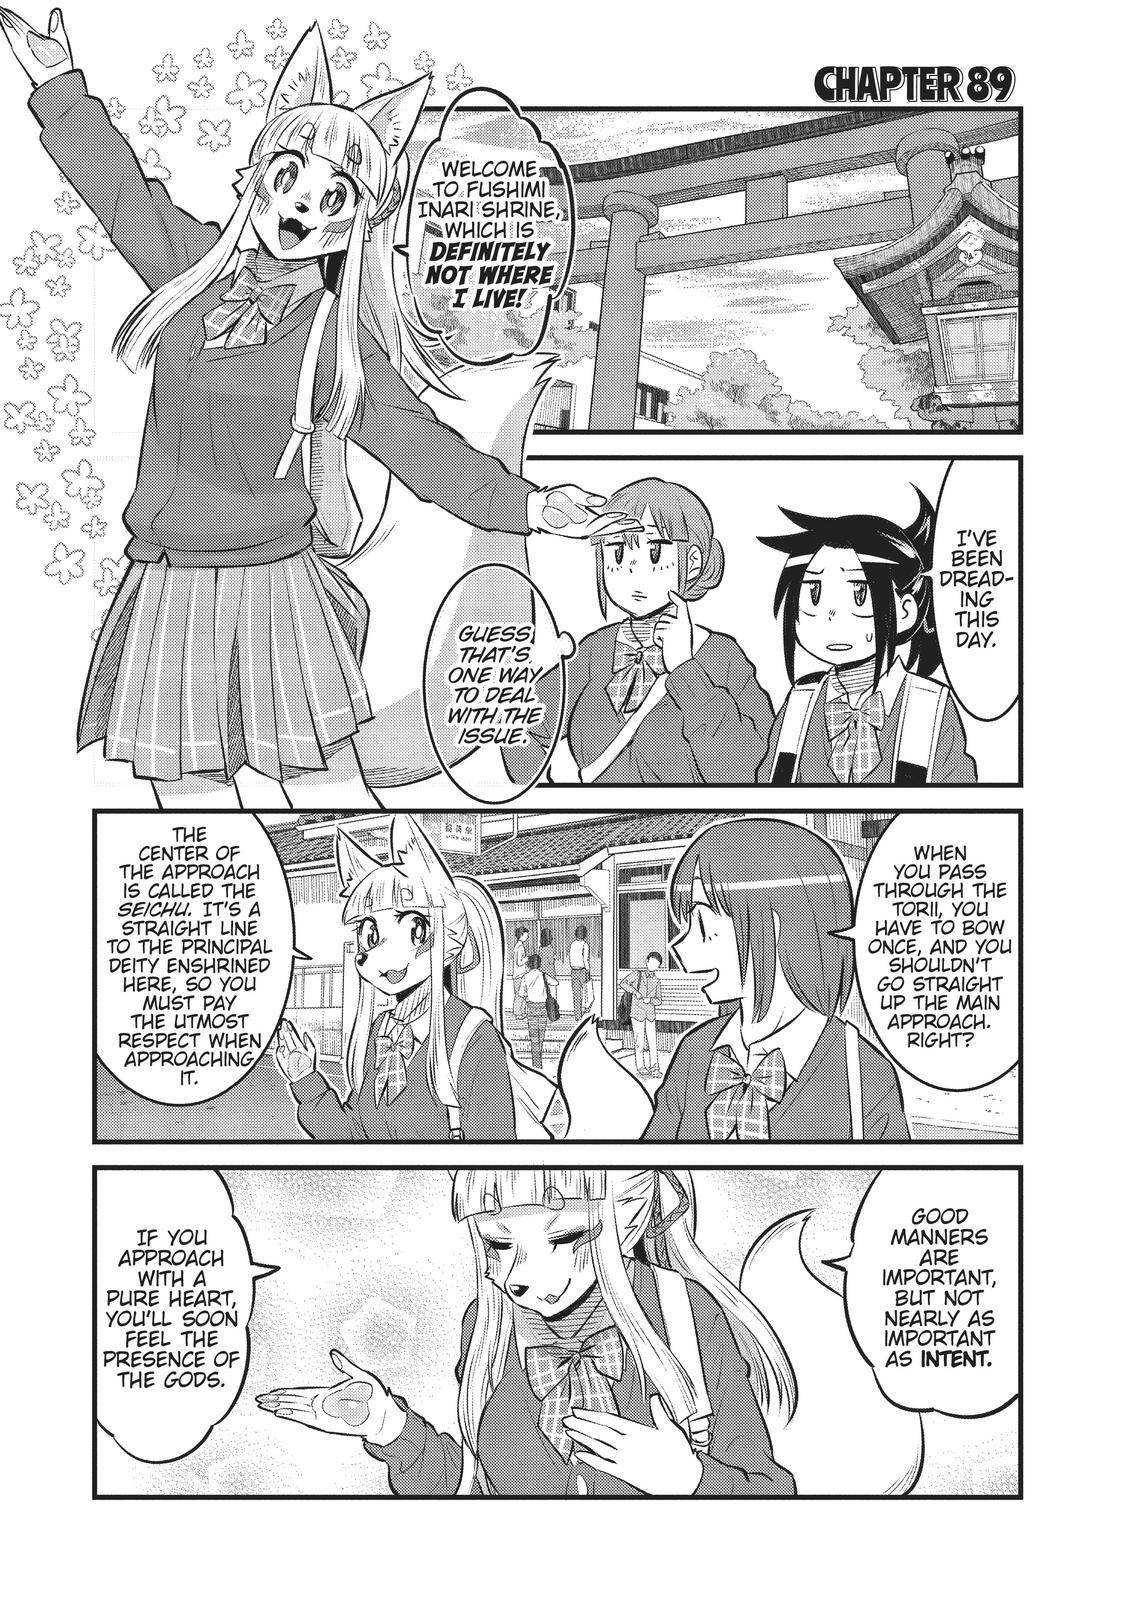 Tamamo-chan's a Fox! - chapter 89 - #1